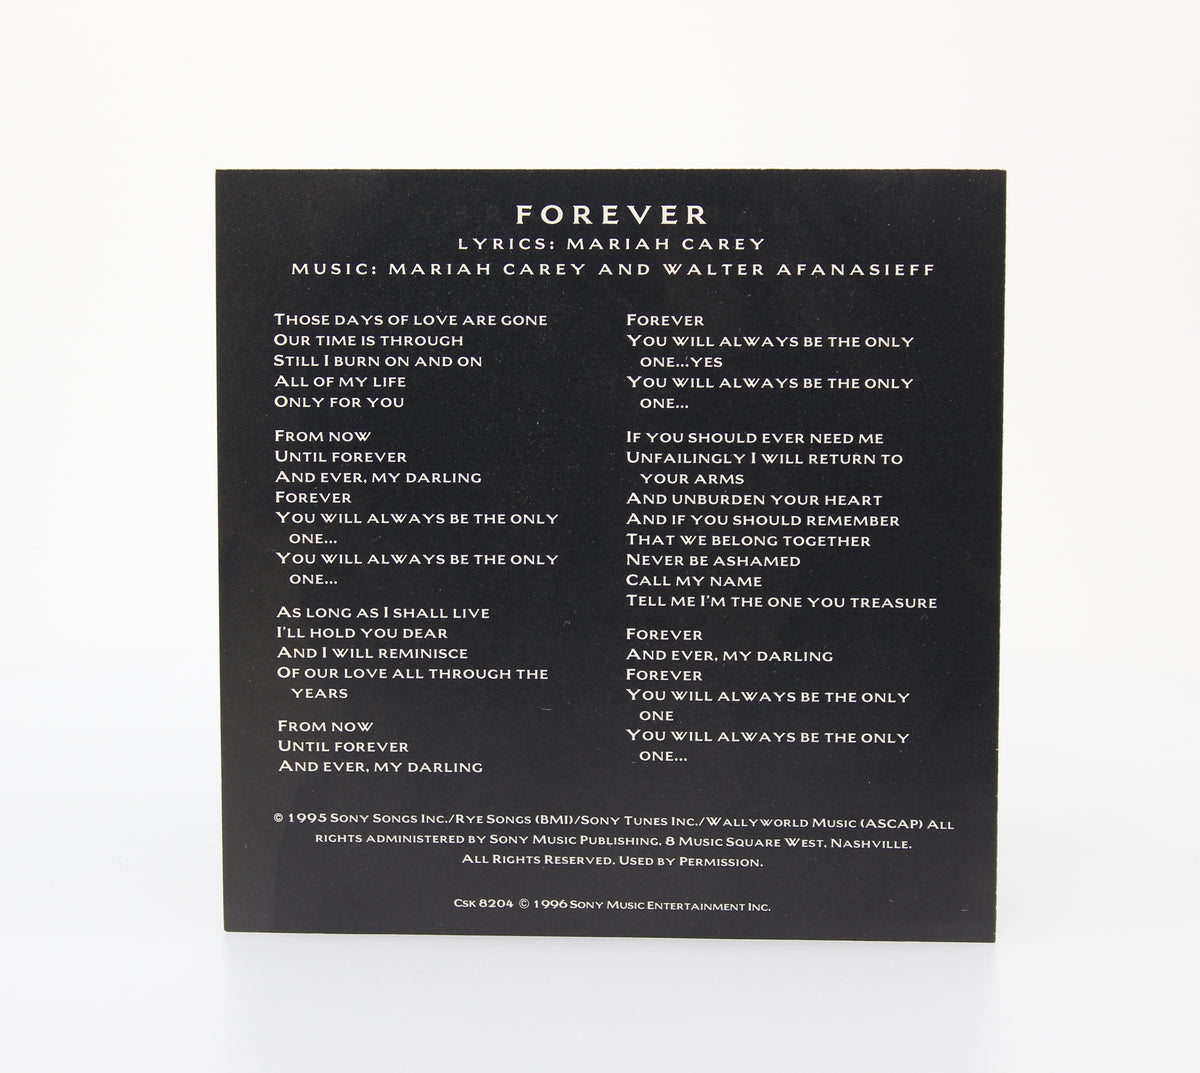 Mariah Carey, Forever, CD Single Promo, US 1996 (CD 650)